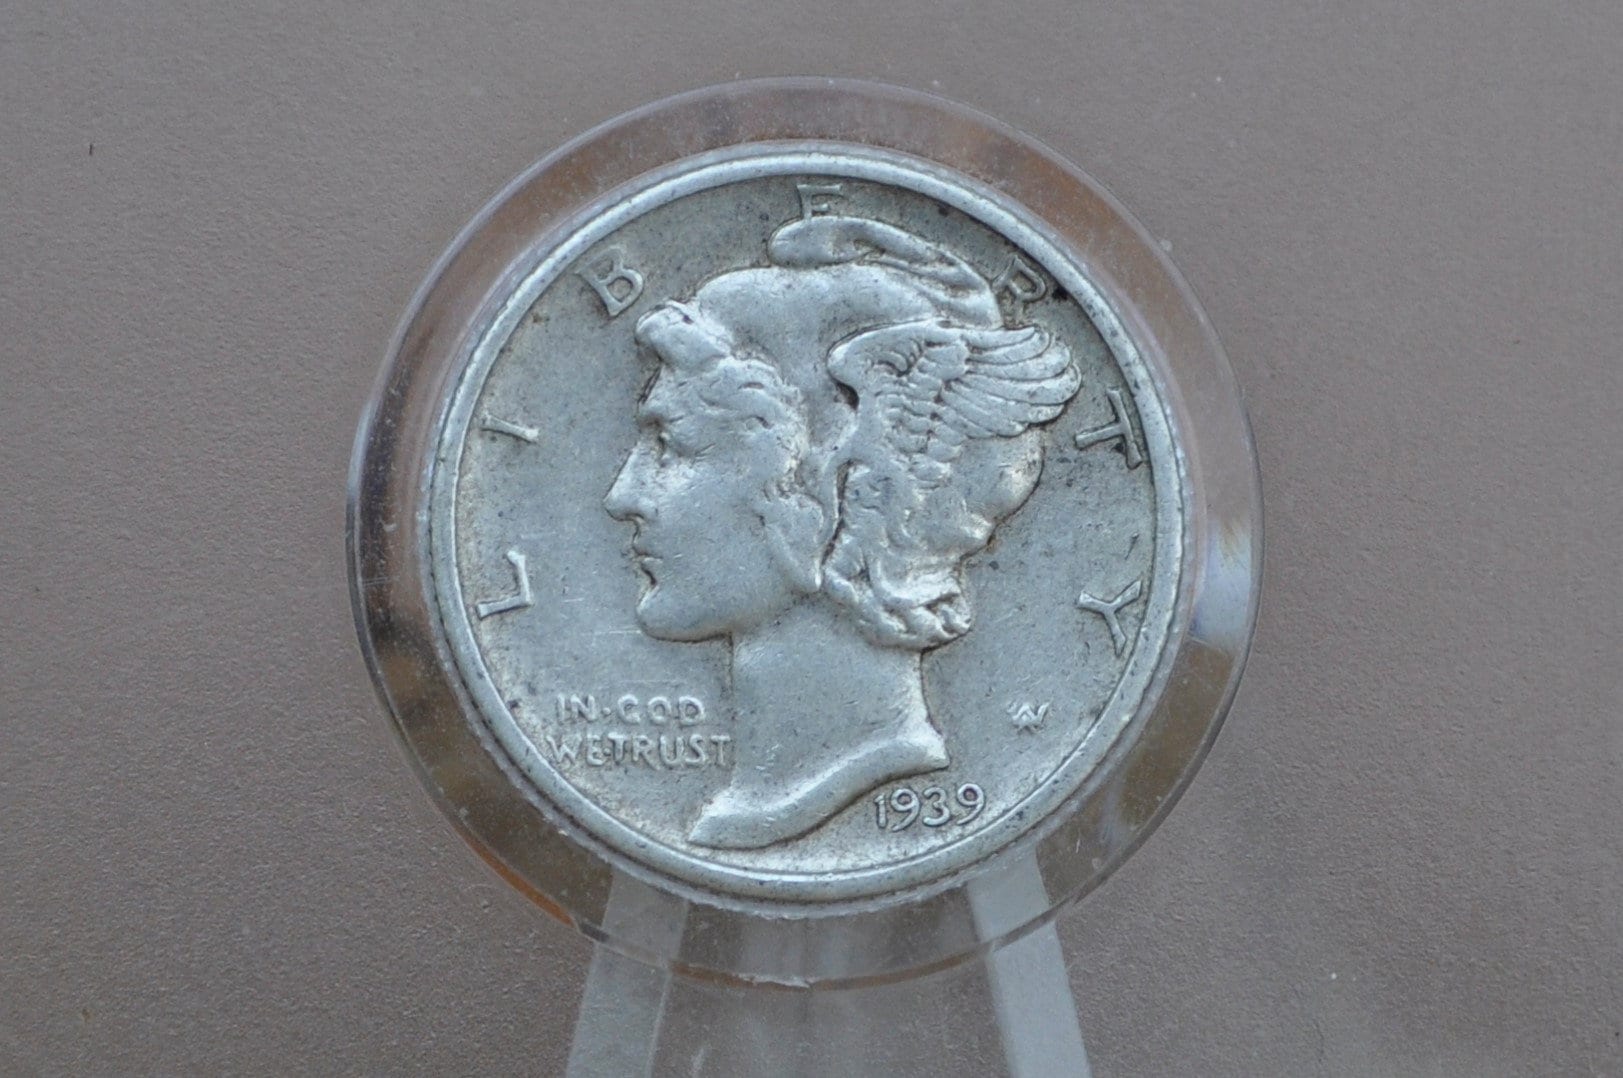 Lot of 10 Mercury Dimes - 1916 - 1945 - Silver Dime - 1910's, 1920's, 1930's or 1940's - PDS - Mercury Silver Dimes